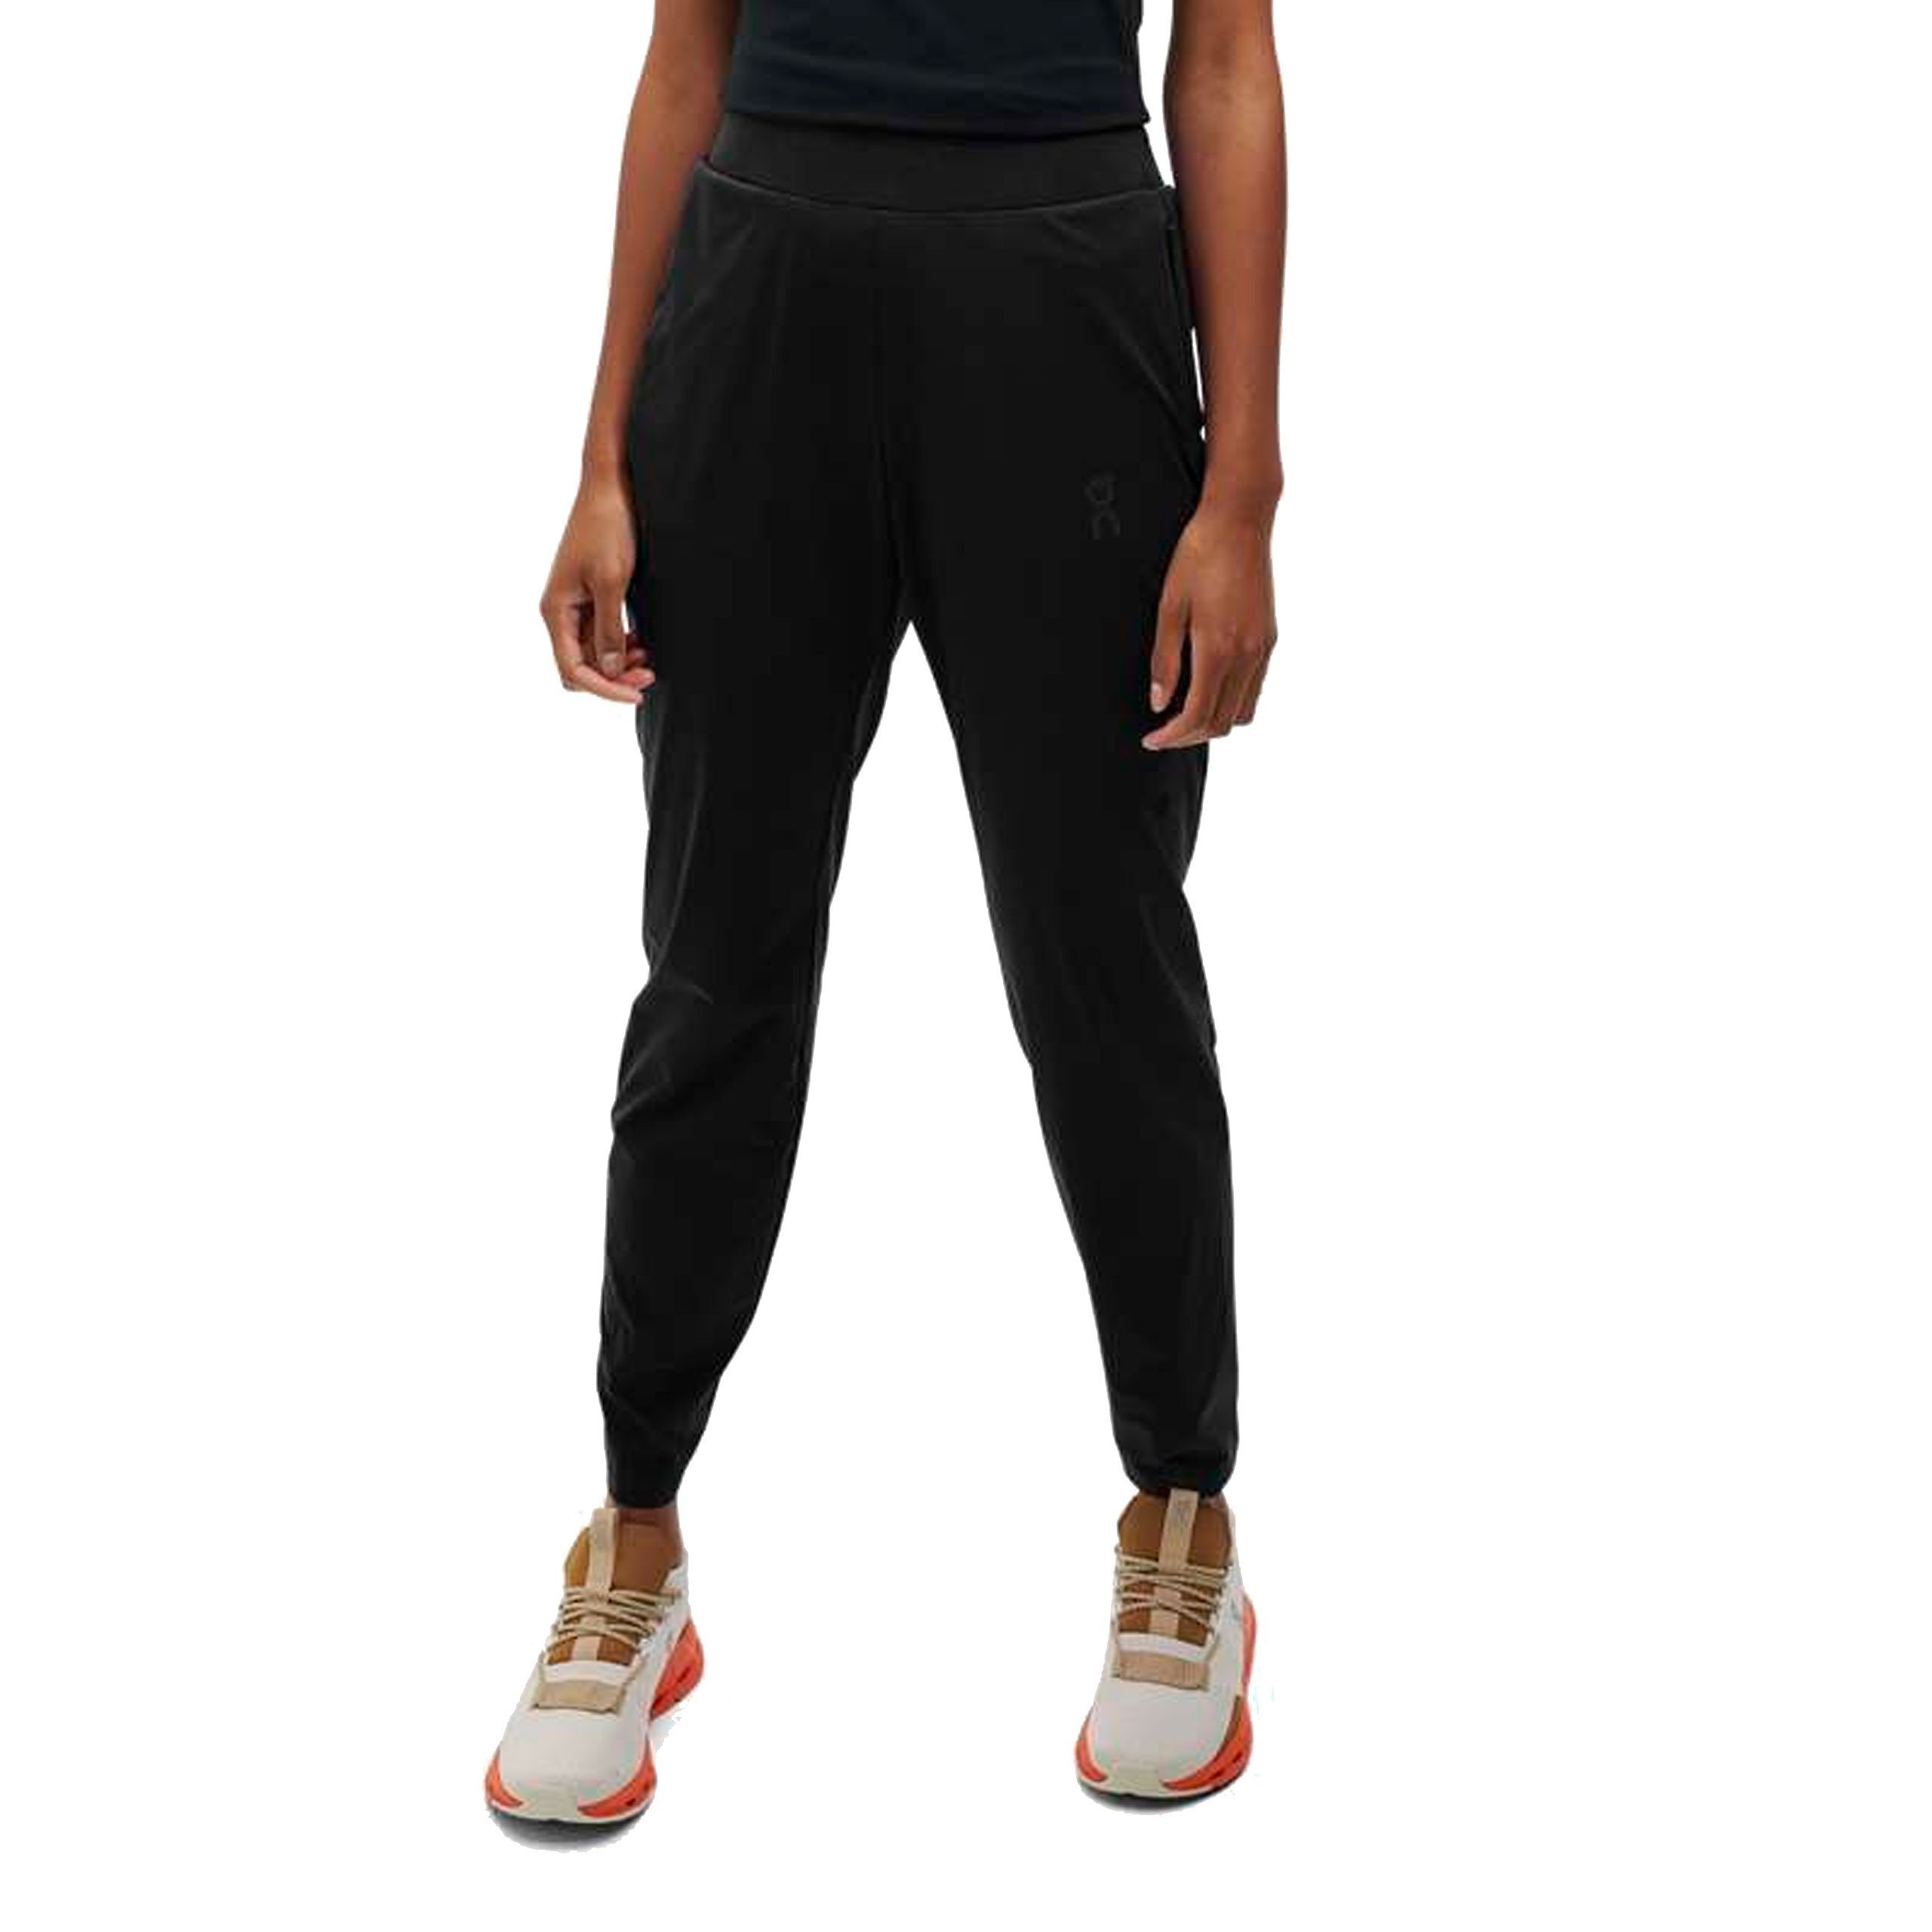 ON Lightweight - on für black leichte Women Pants Damen Laufhose Funktionshose RUNNING